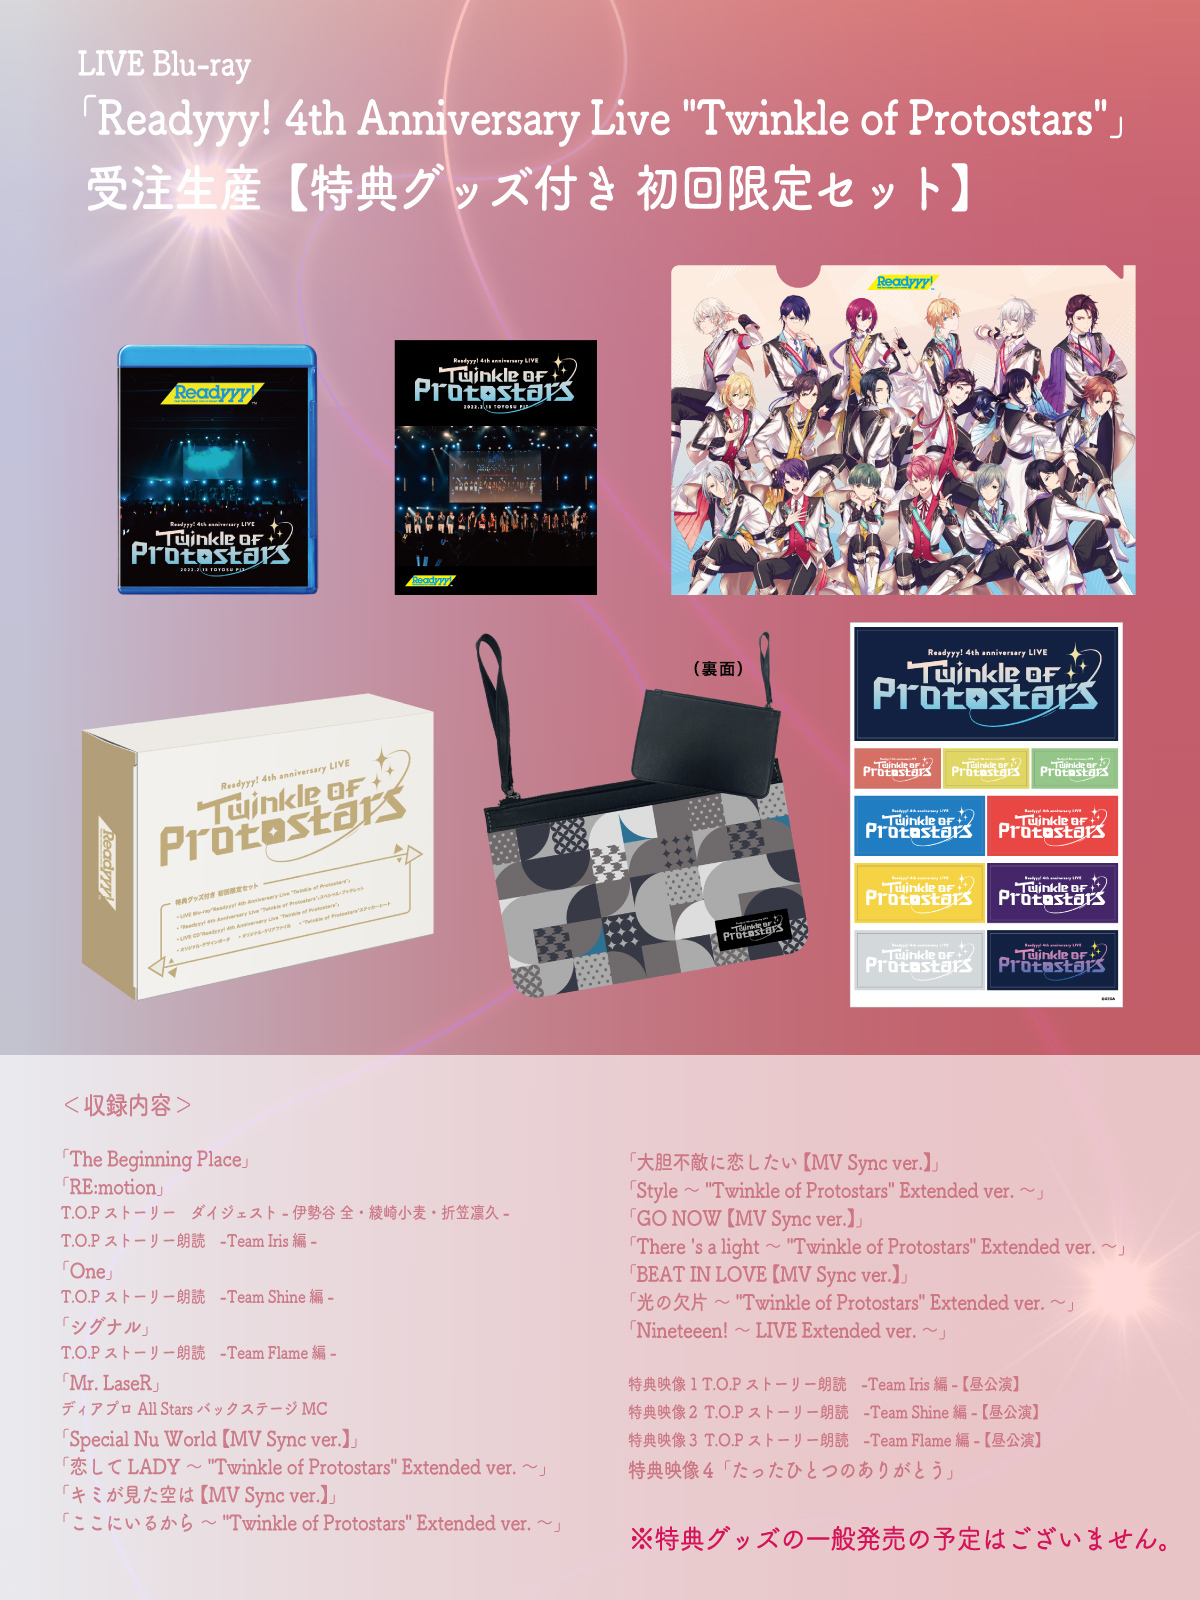 LIVE Blu-ray「Readyyy! 4th Anniversary Live "Twinkle of Protostars"」【受注生産限定BOXセット】